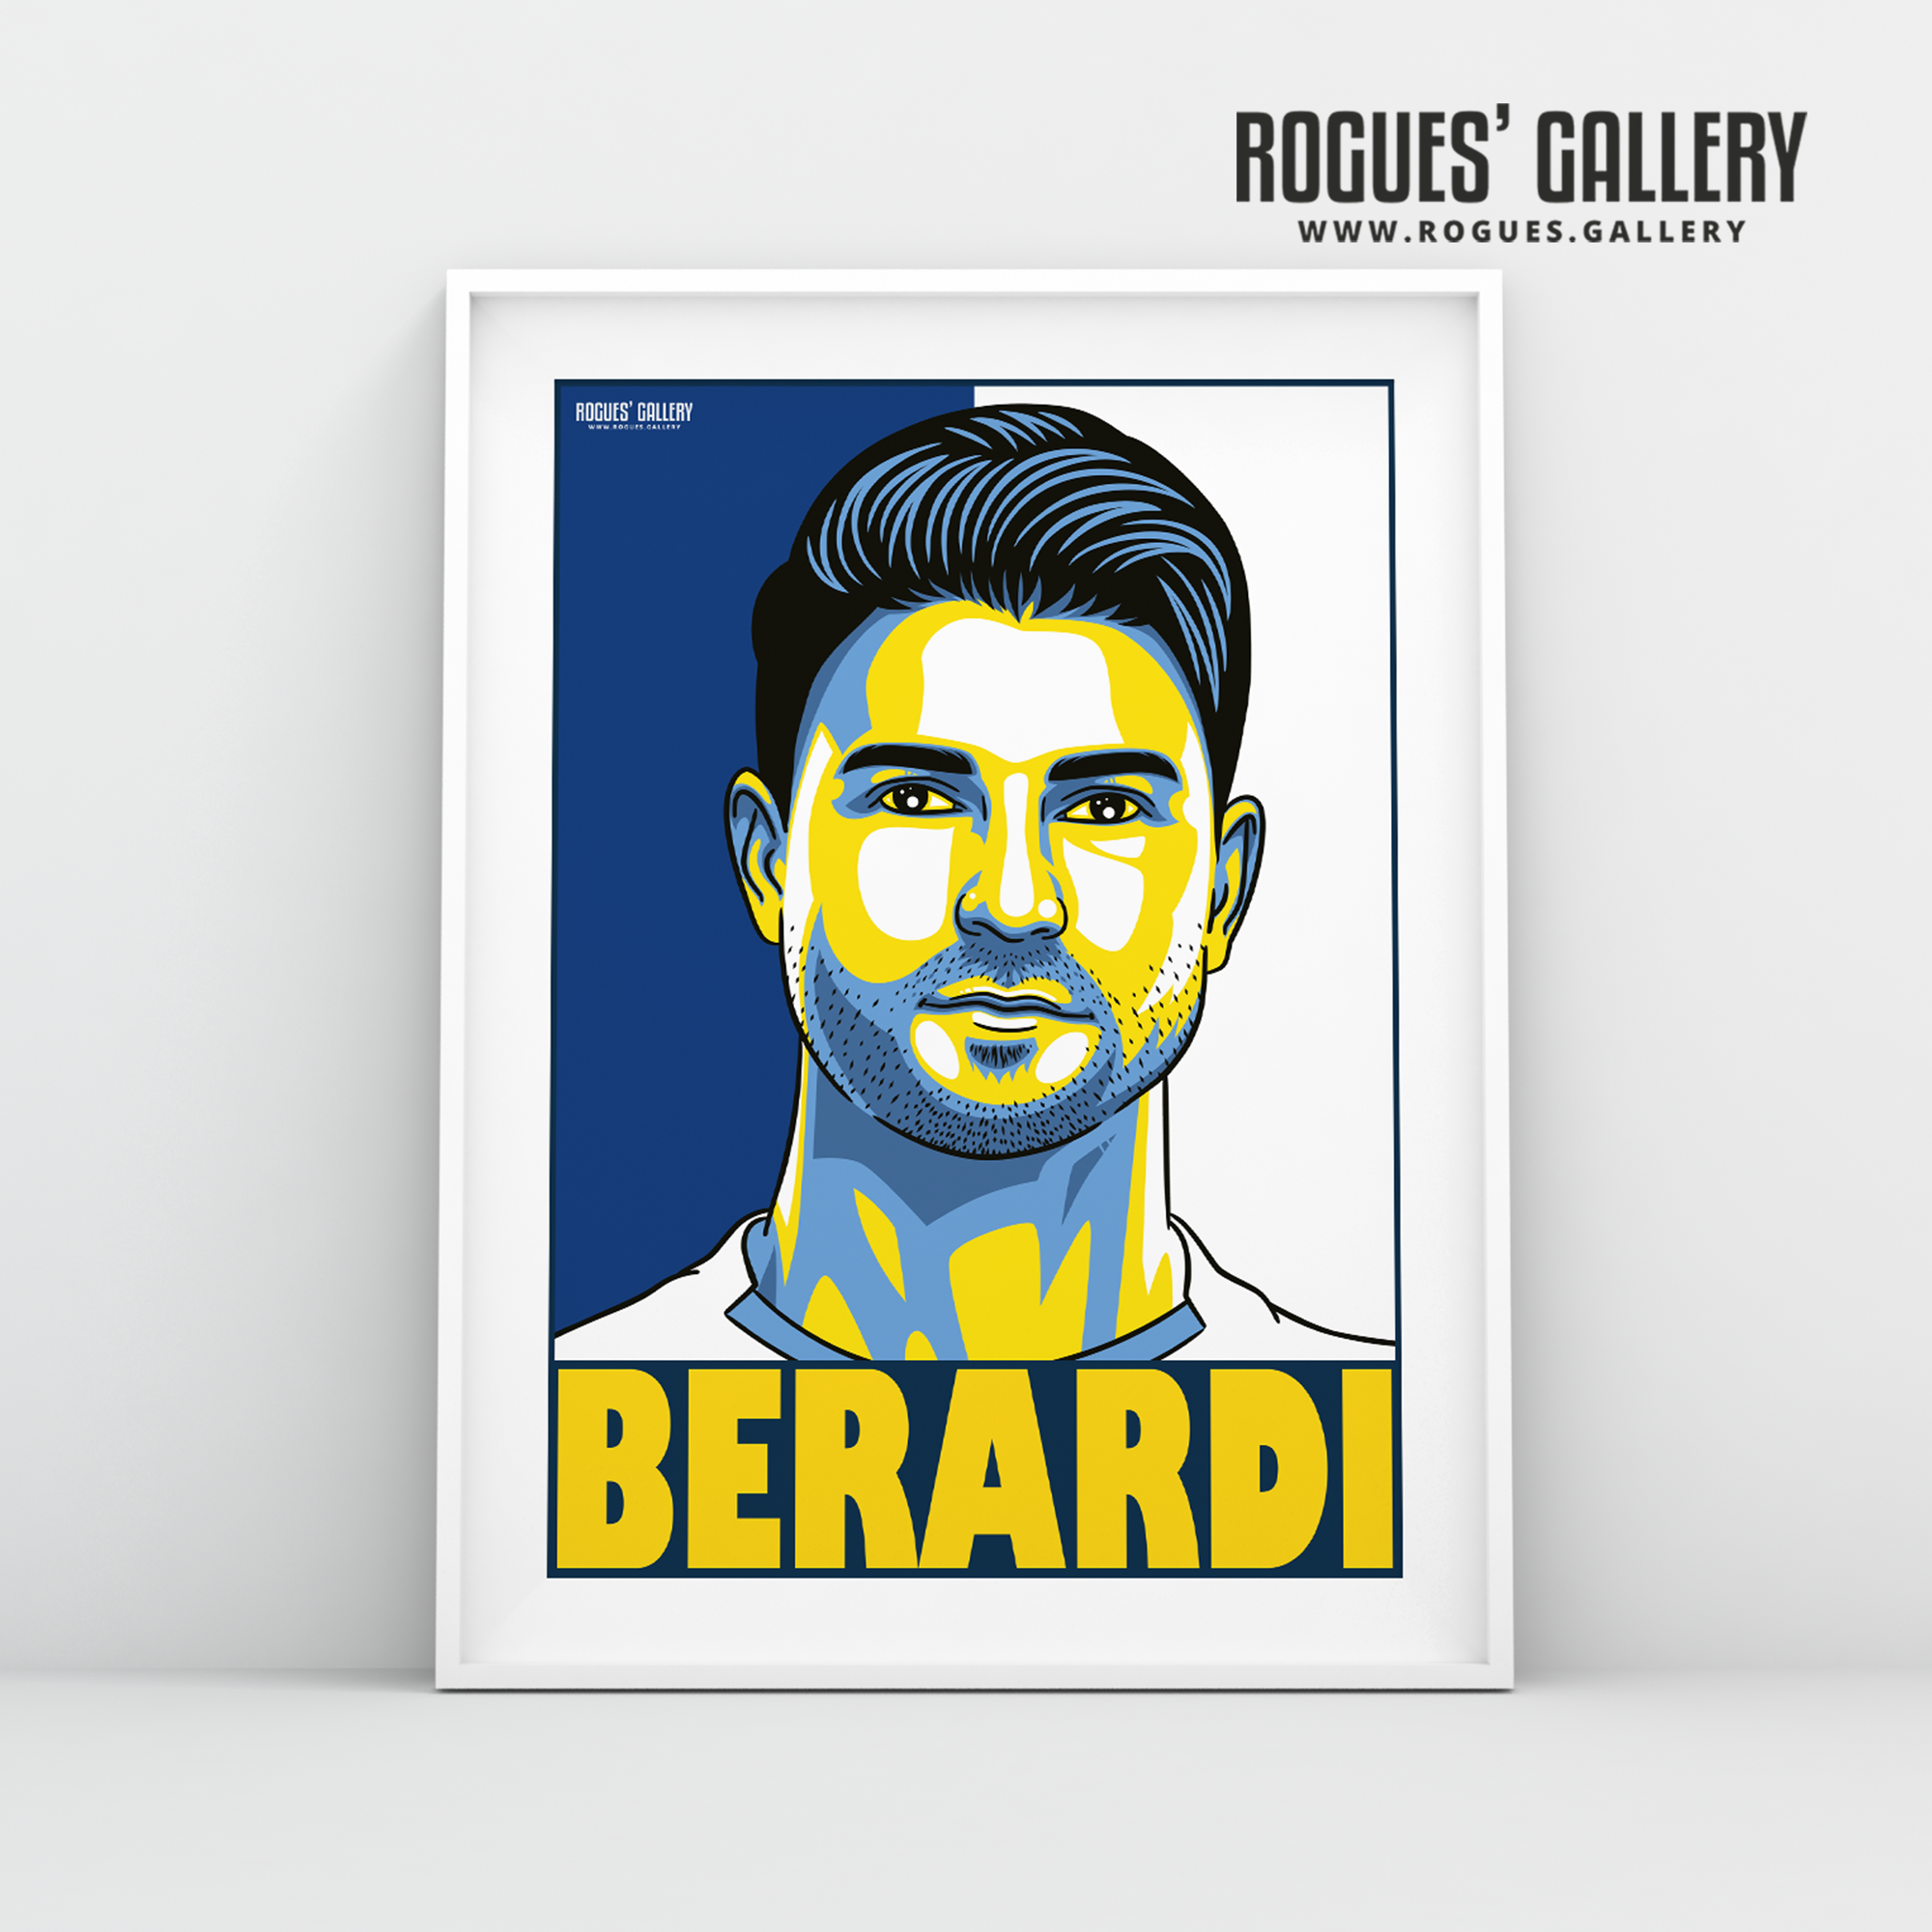 Gaetano Berardi Leeds United FC defender A3 art print design